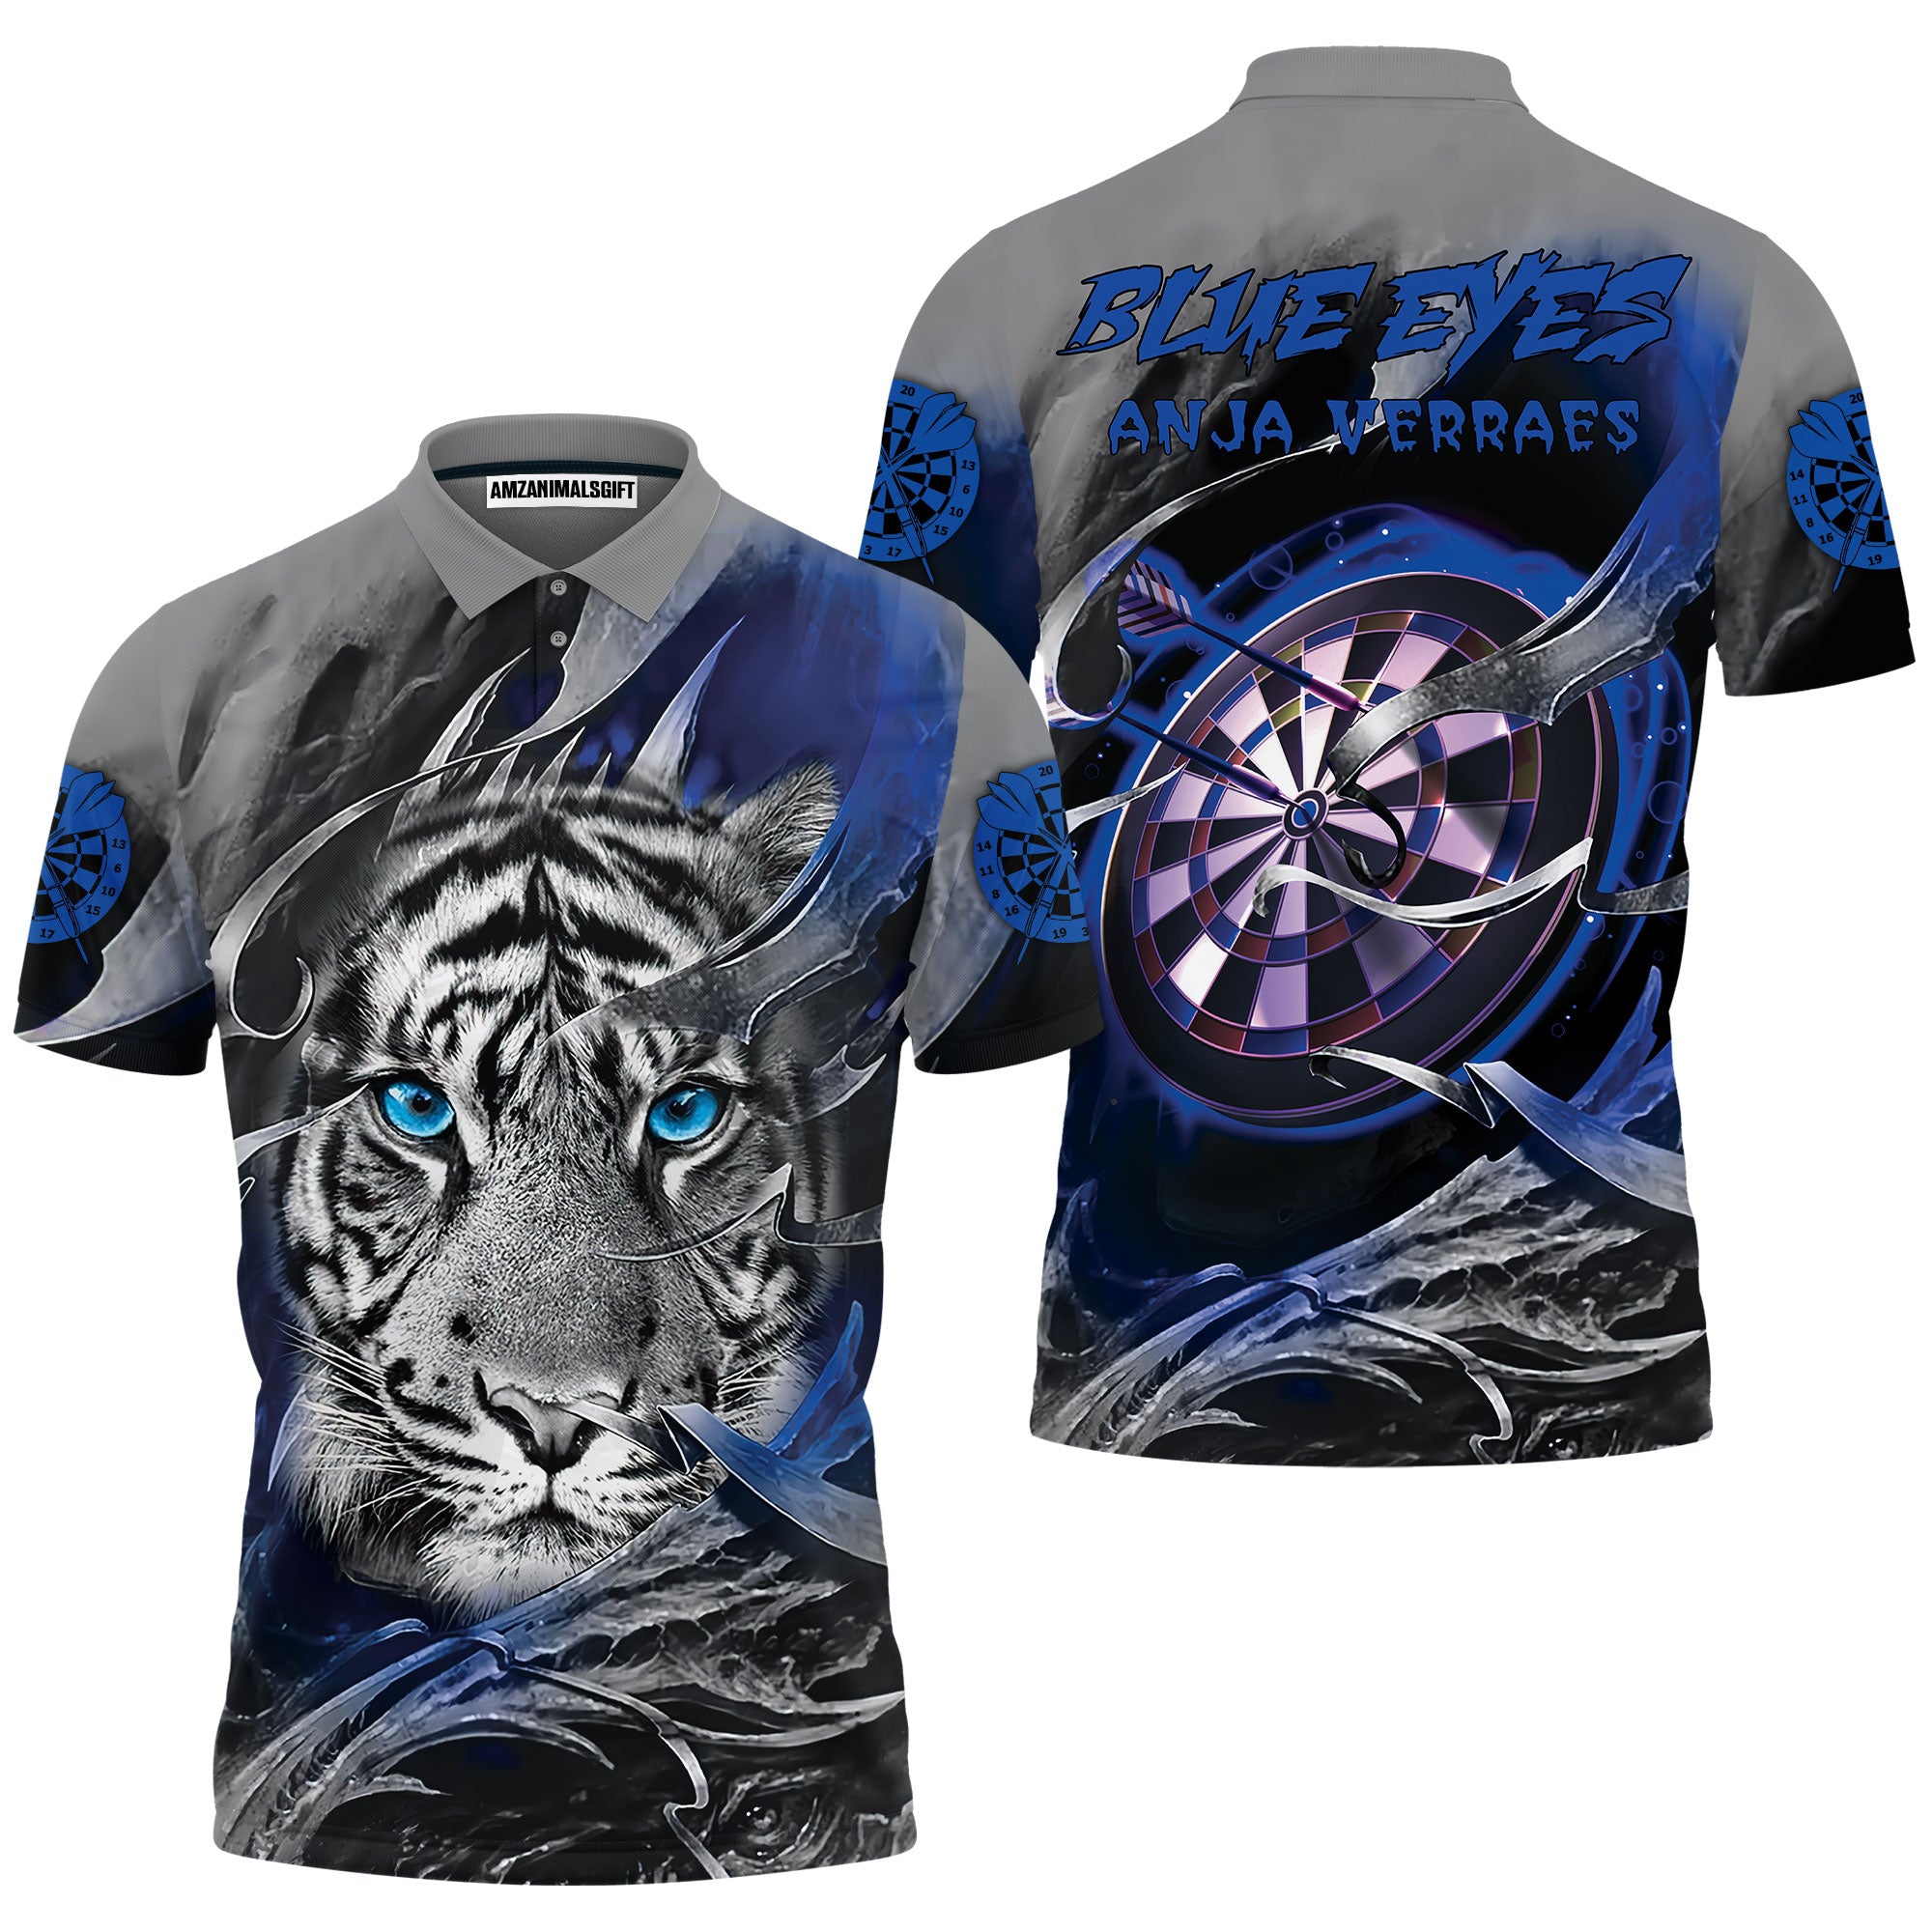 Darts Blue Eyes Anja Verraes Men Polo Shirt, Blue Bullseye Dartboard Tiger Polo Shirts For Men, Outfit For Darts Lover, Team